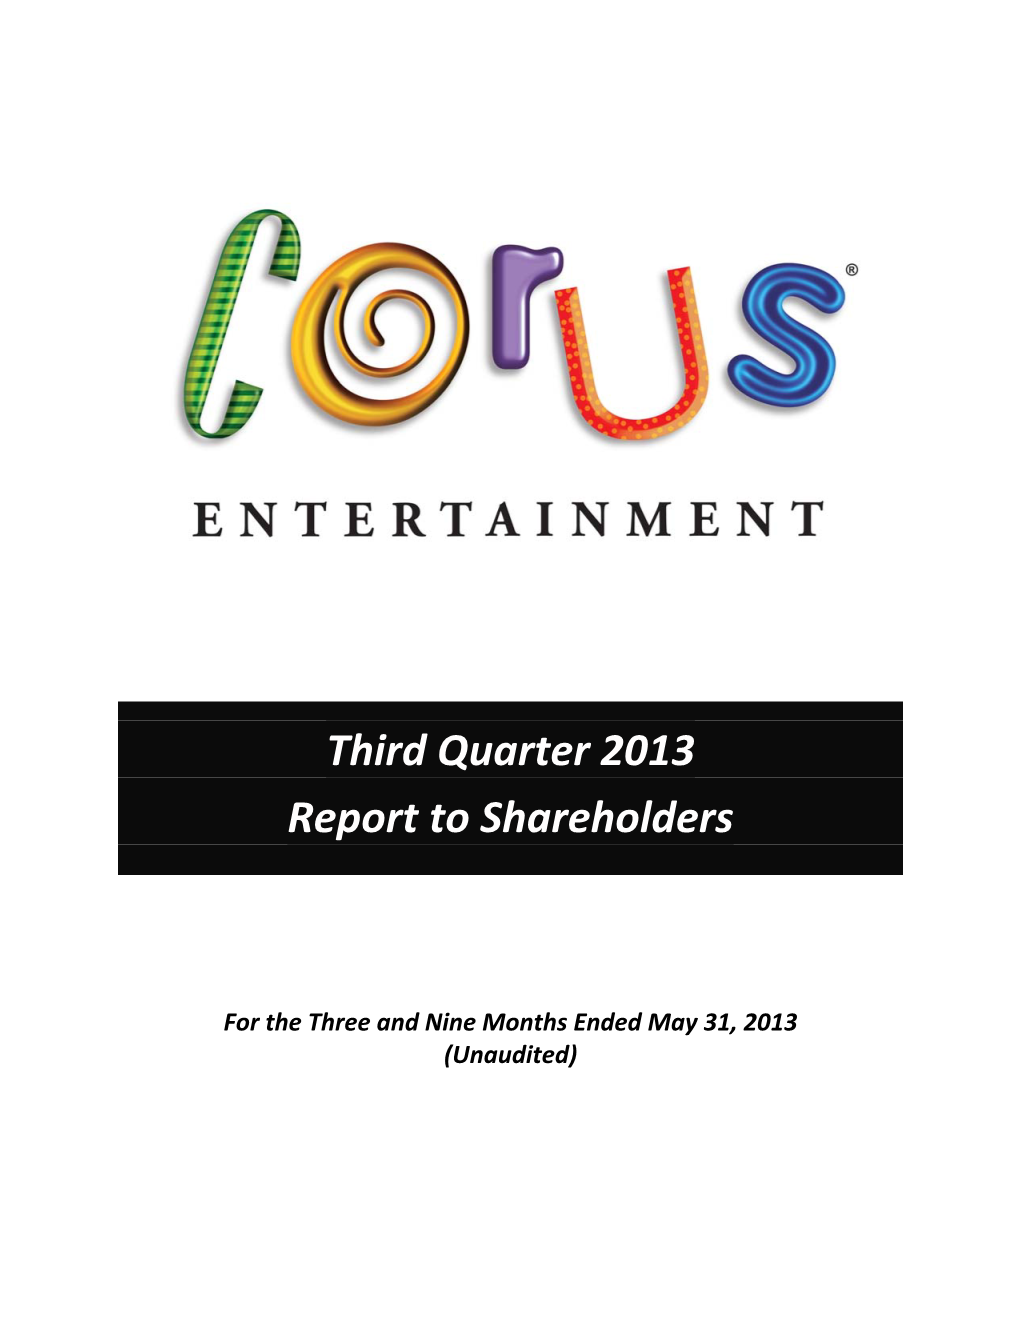 Third Quarter 2013 Report to Shareholders